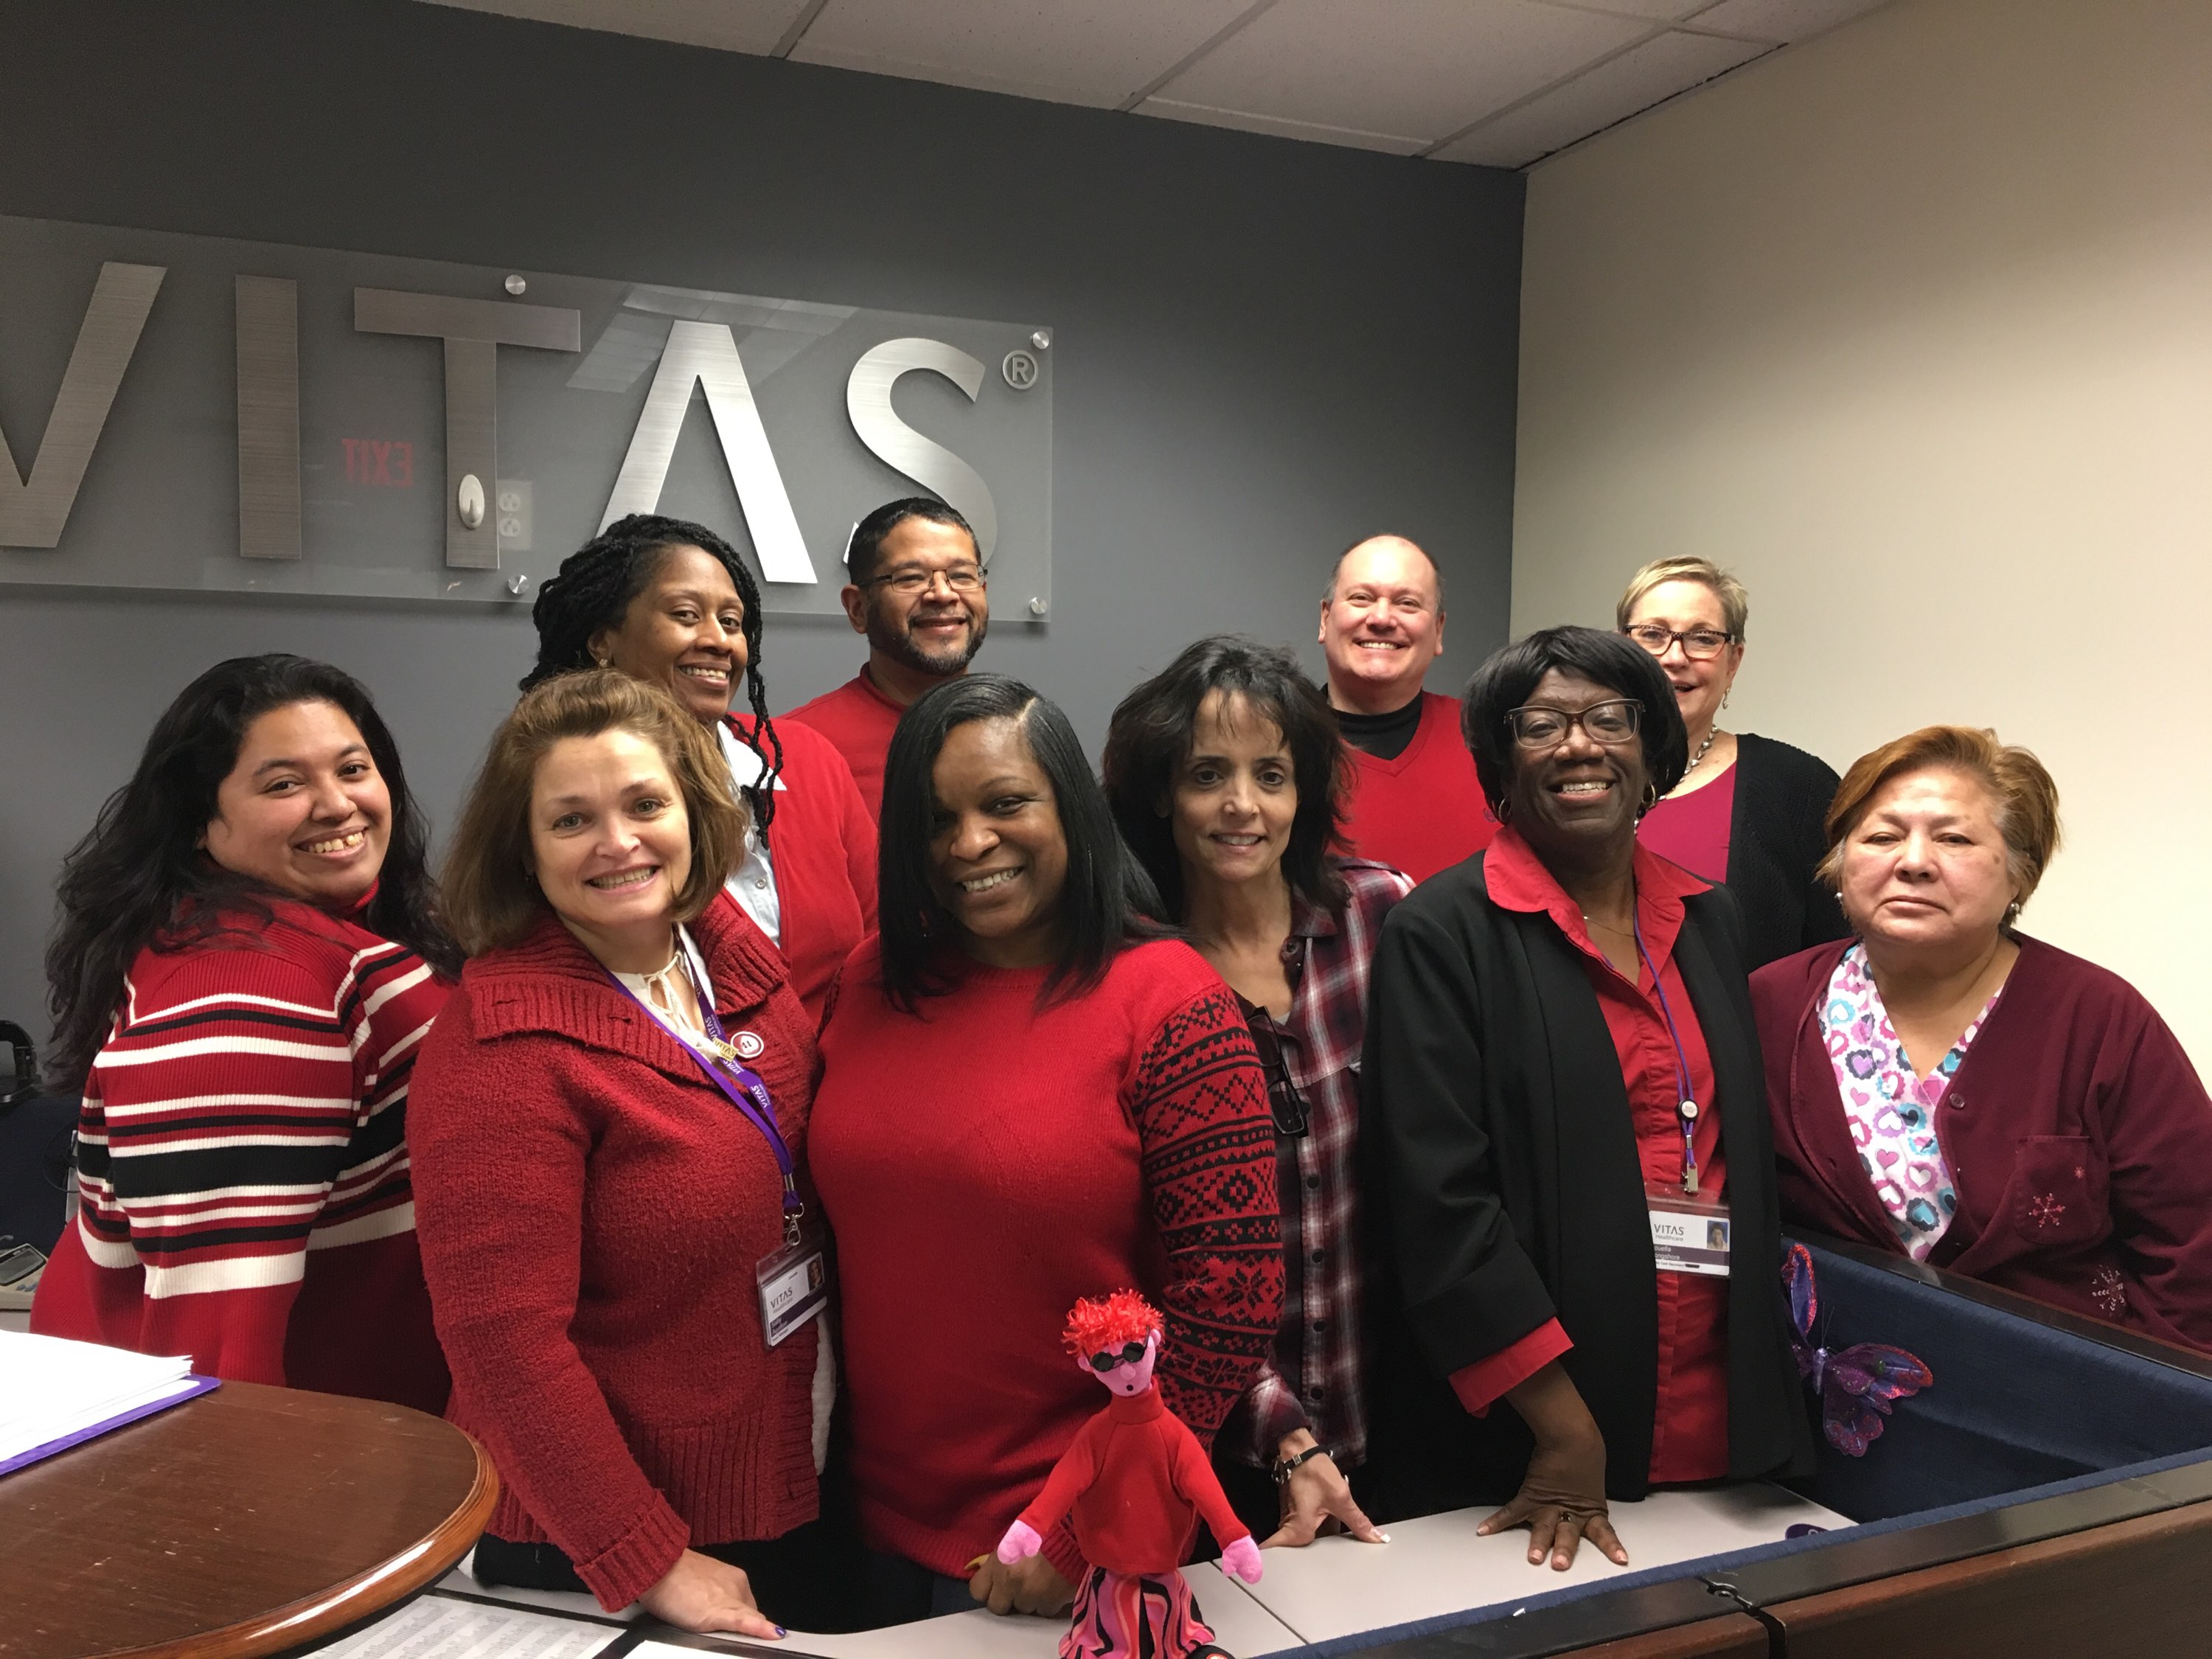 VITAS team members wear red in support of women's heart health